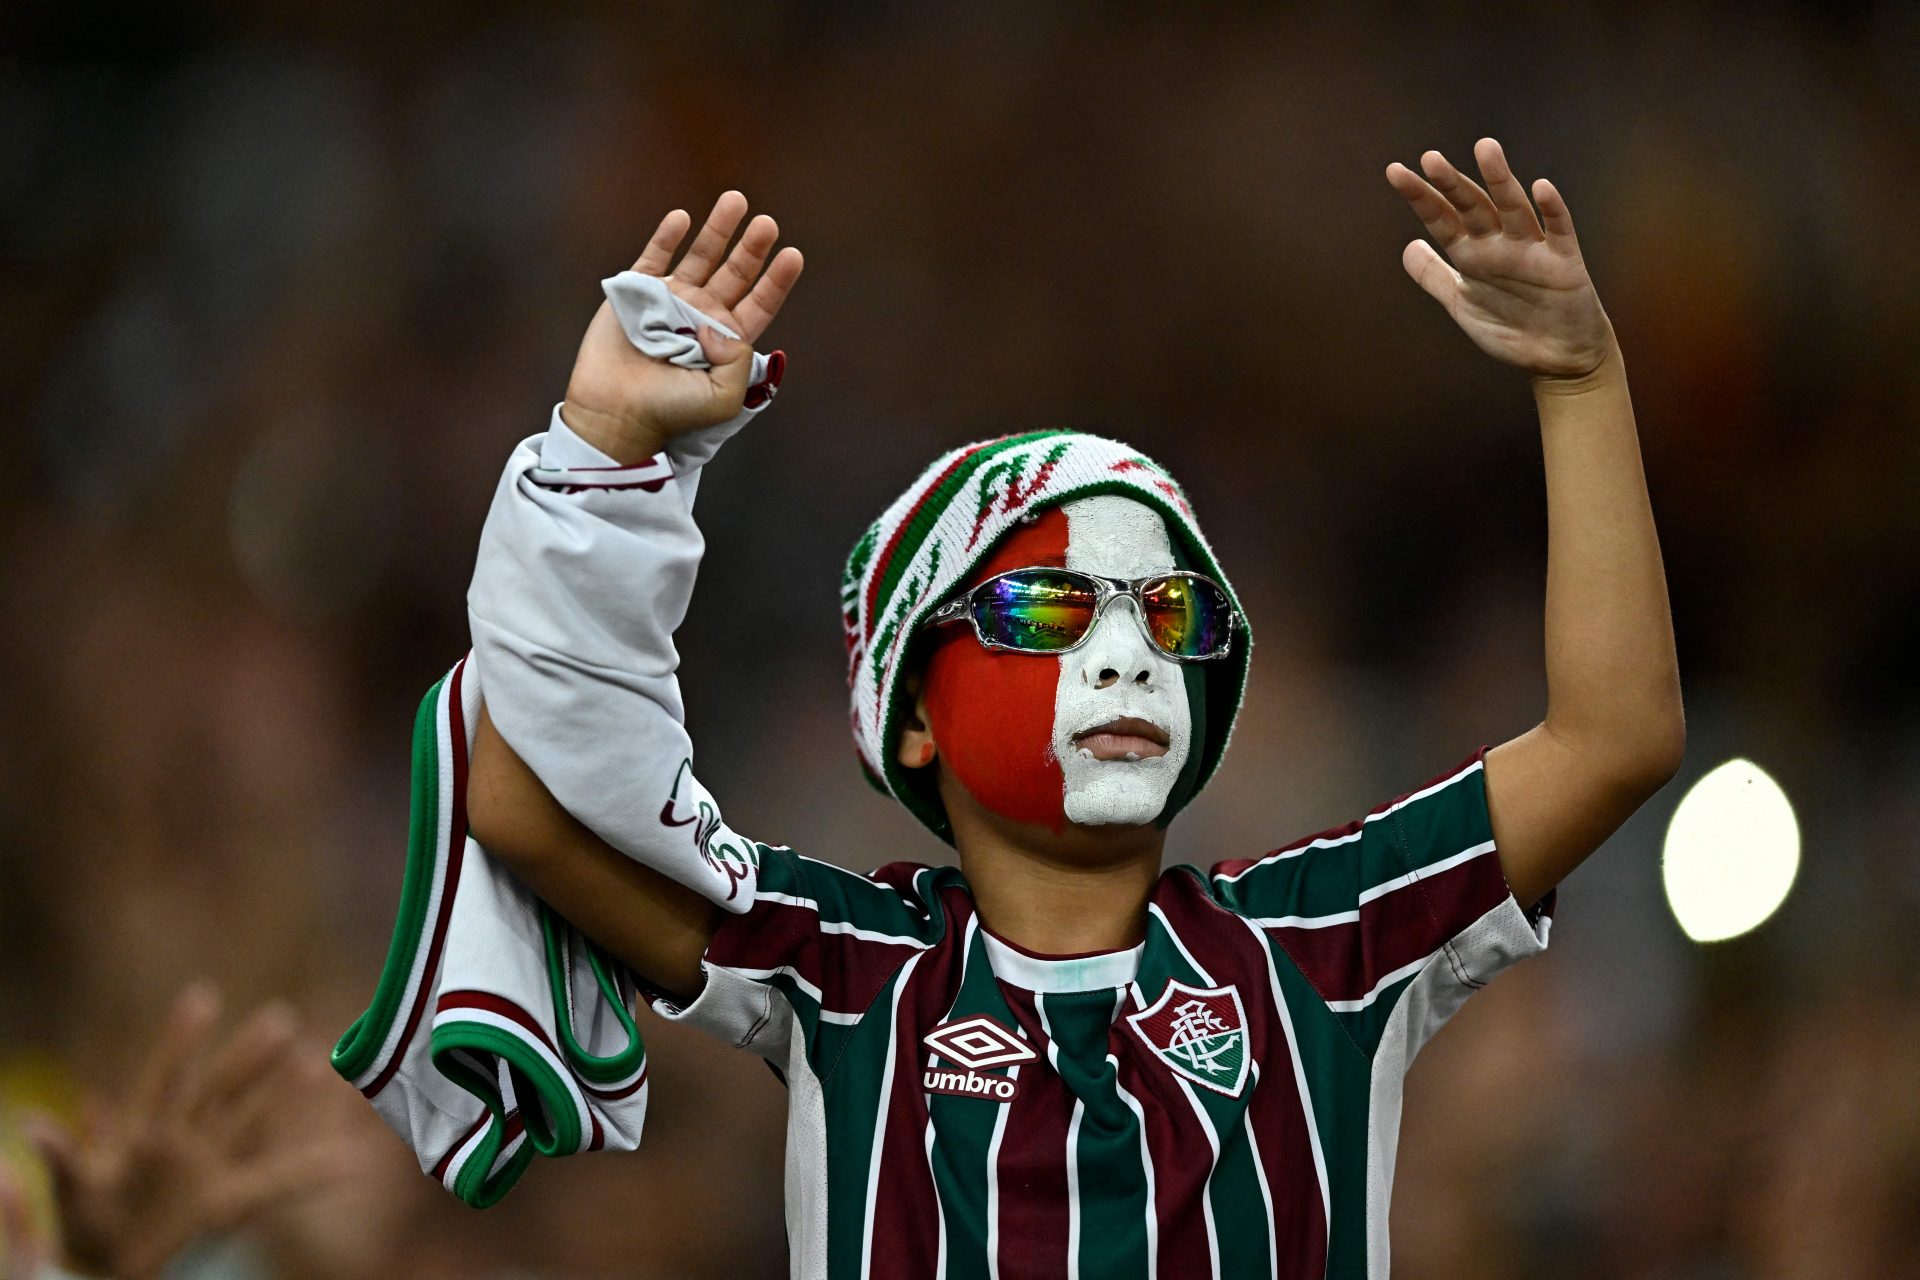 A new era of Brazilian football?